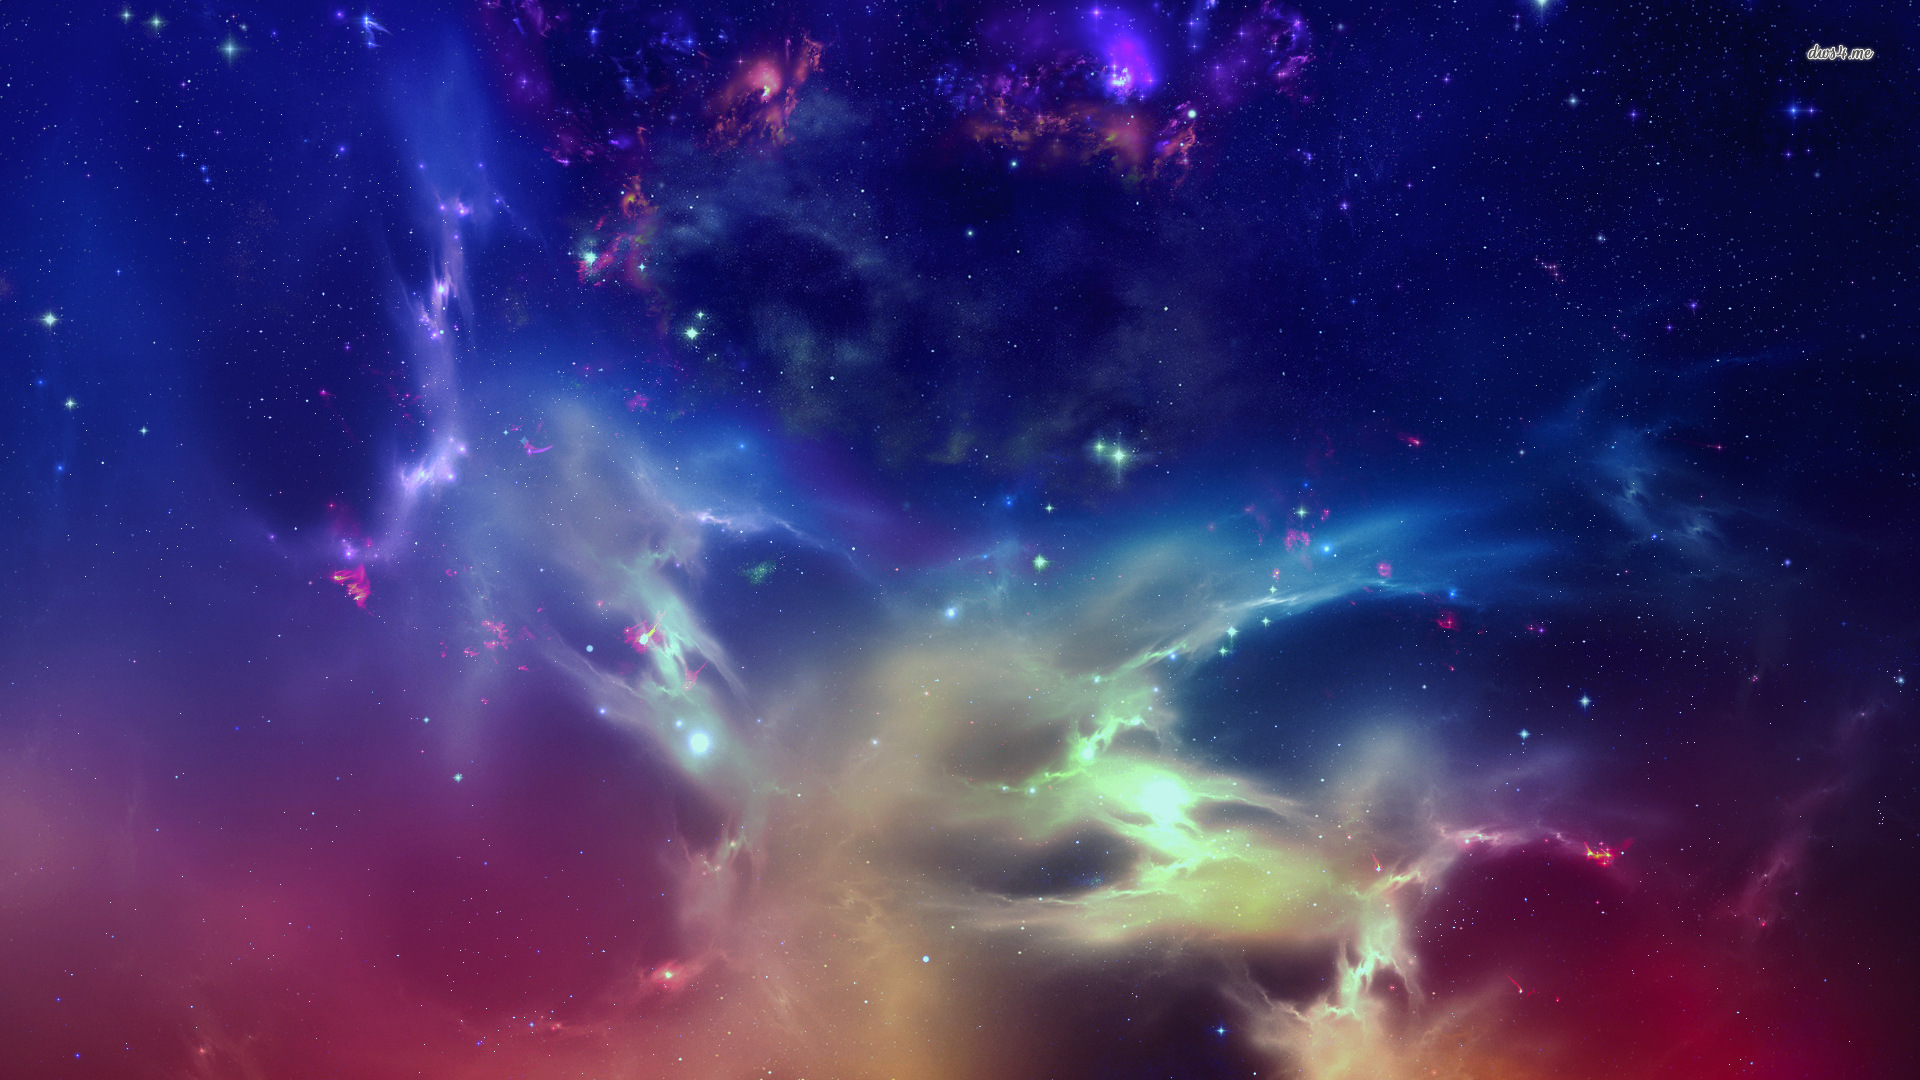 android n壁紙1080p,空,星雲,雰囲気,宇宙,天体